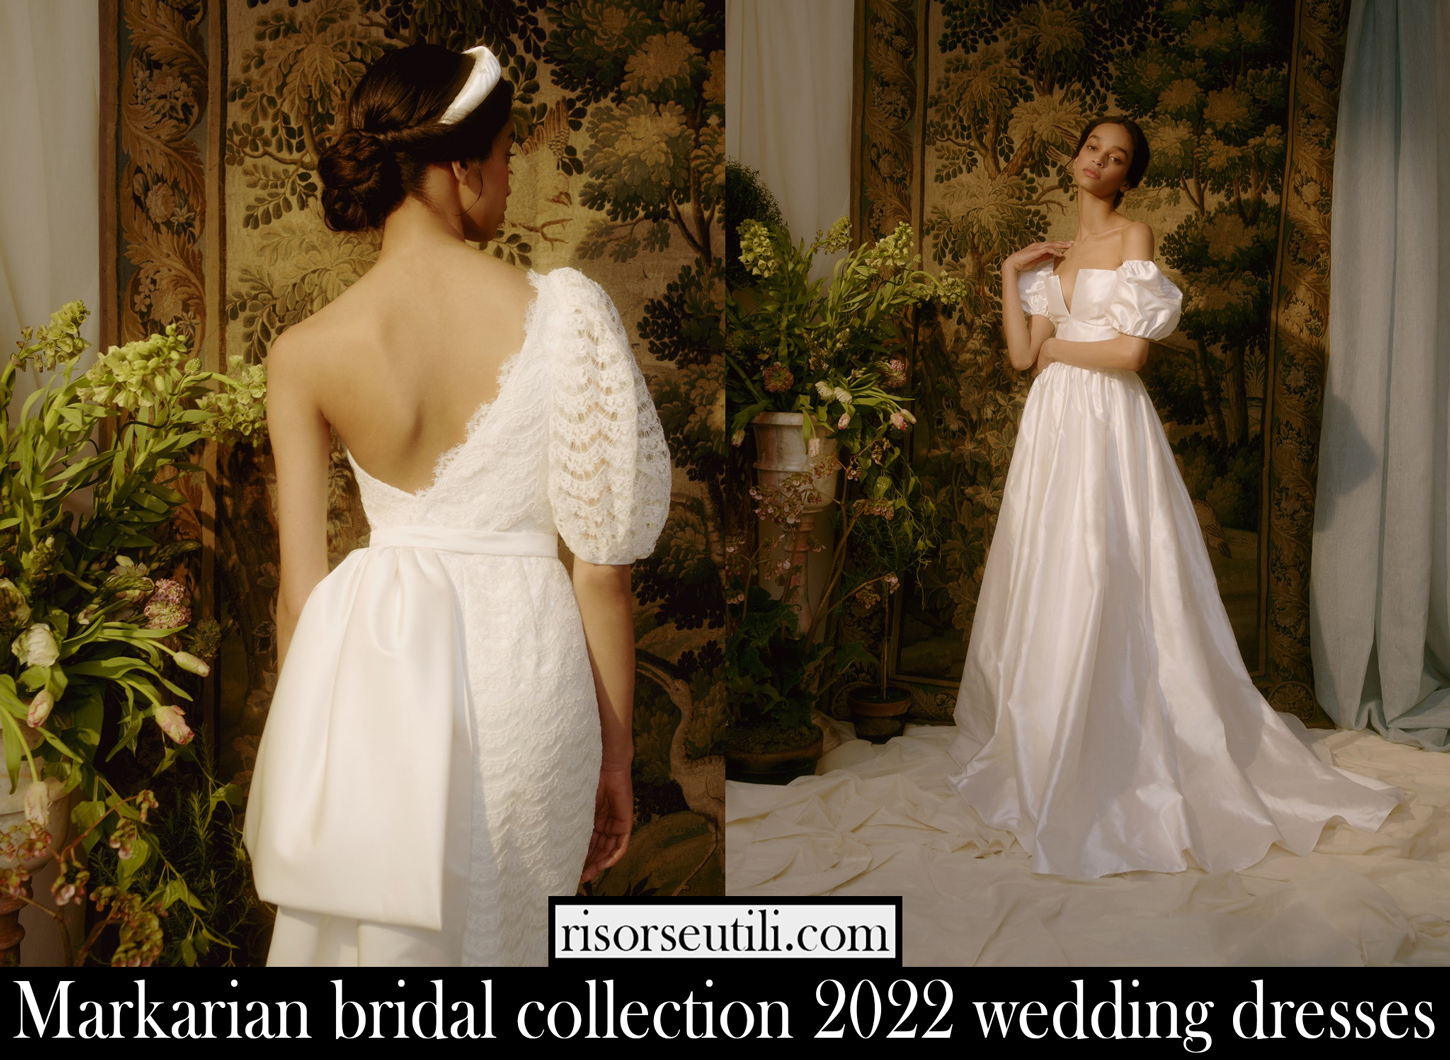 Markarian bridal collection 2022 wedding dresses